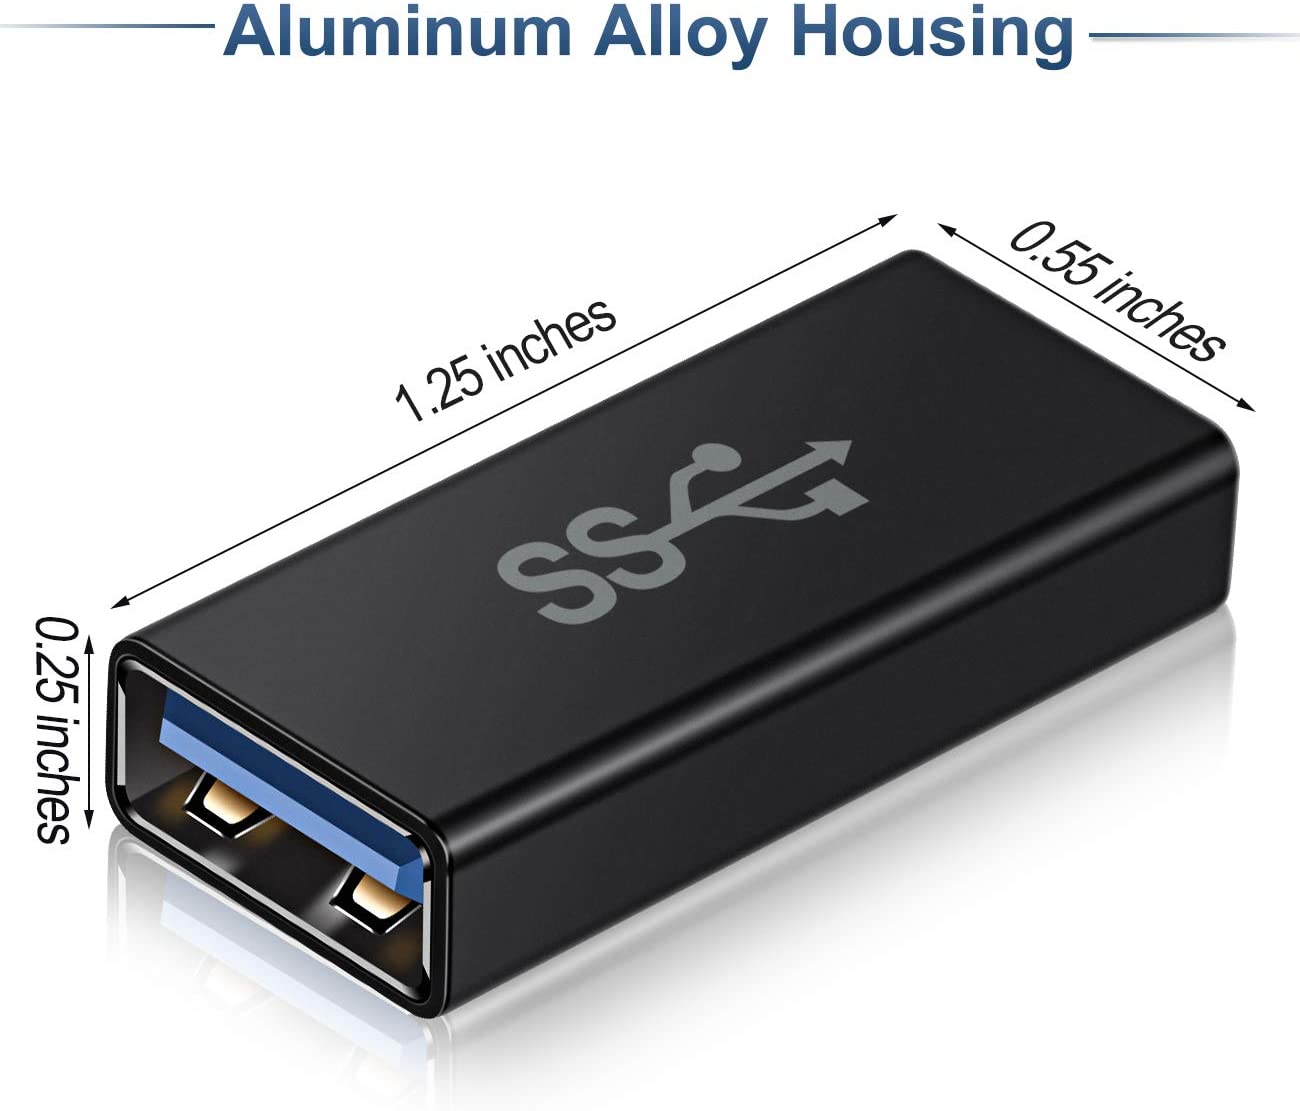 Basesailor USB Female to Female Adapter (3 Pack). - e4cents